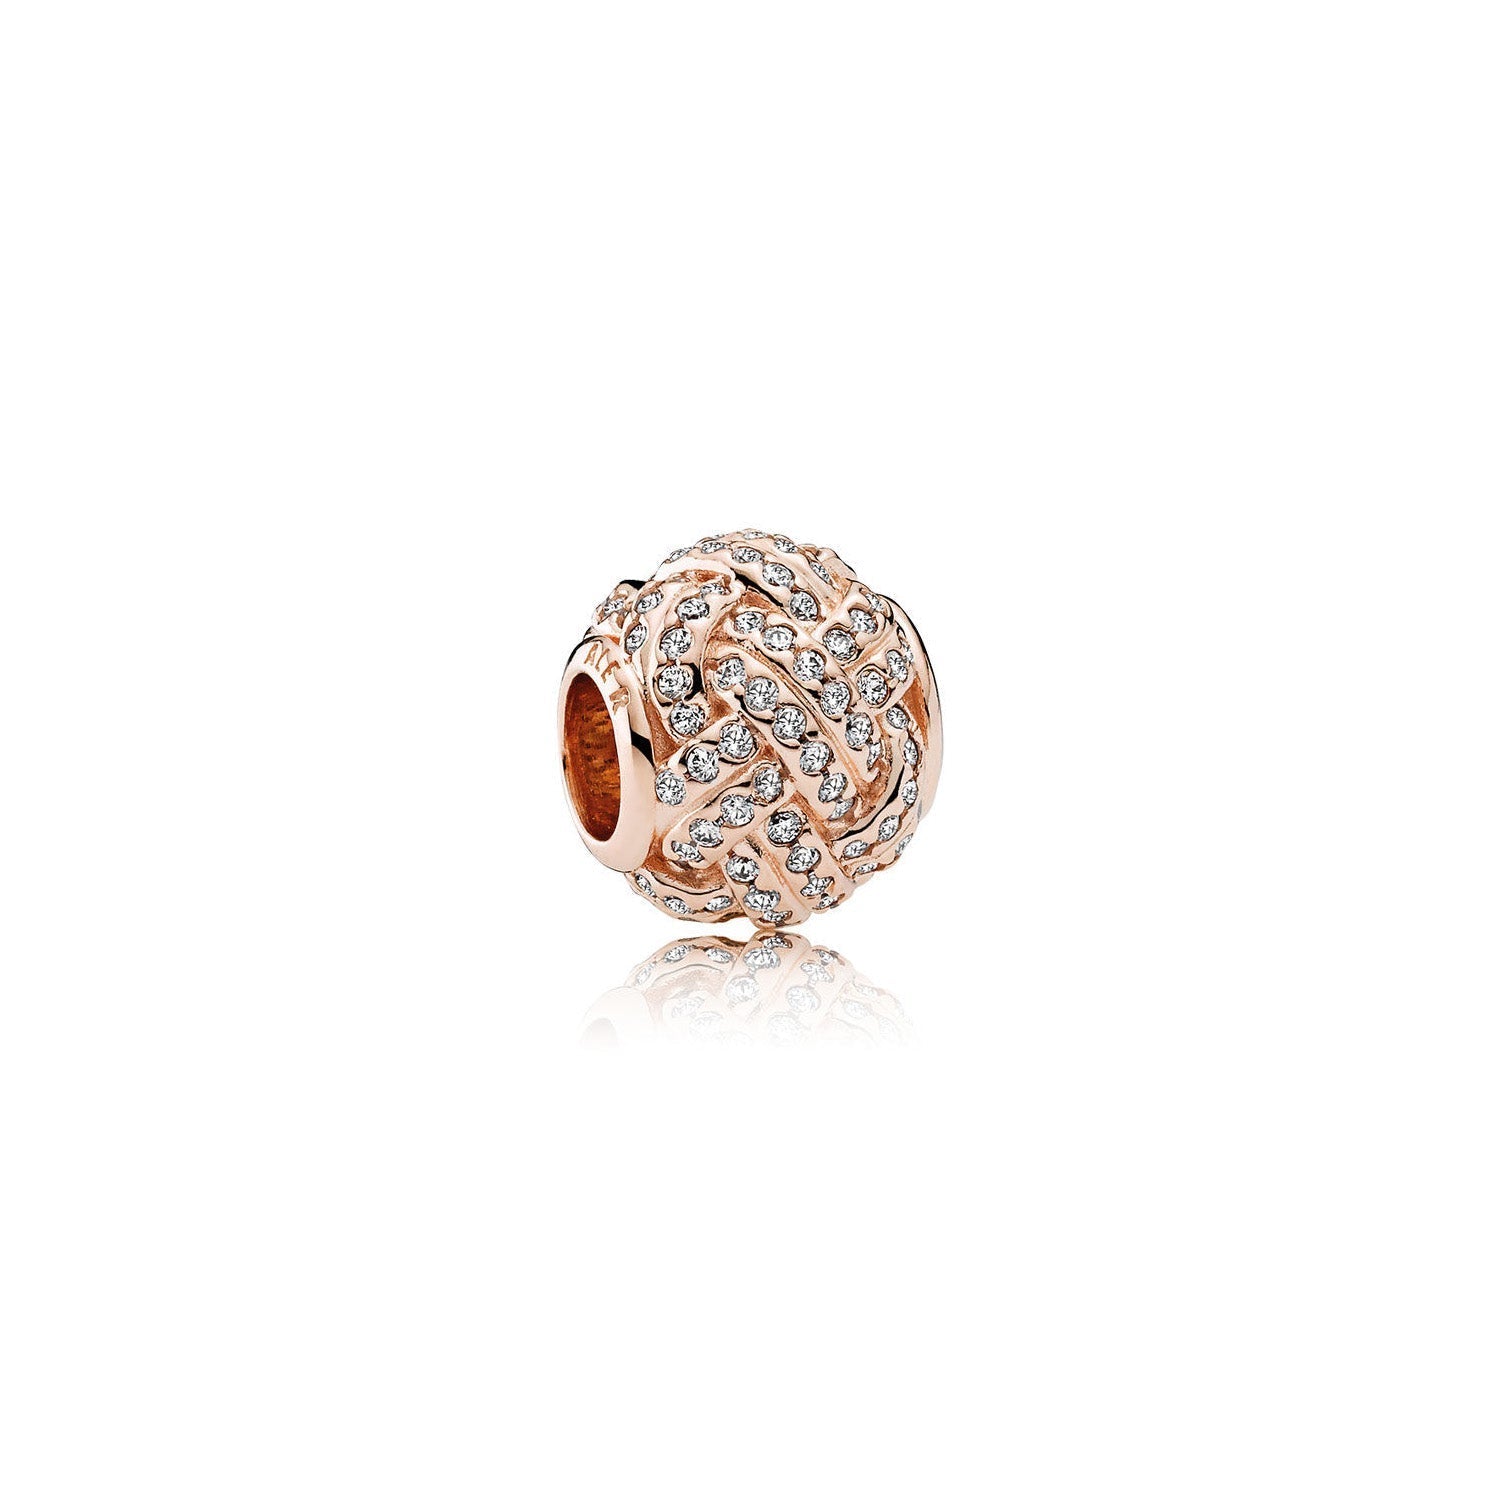 Sparkling Love Knot Petite Verona Charm, Rose Gold, Cubic Zirconia Gemstones - ARJWVC1048RG ARCADIO